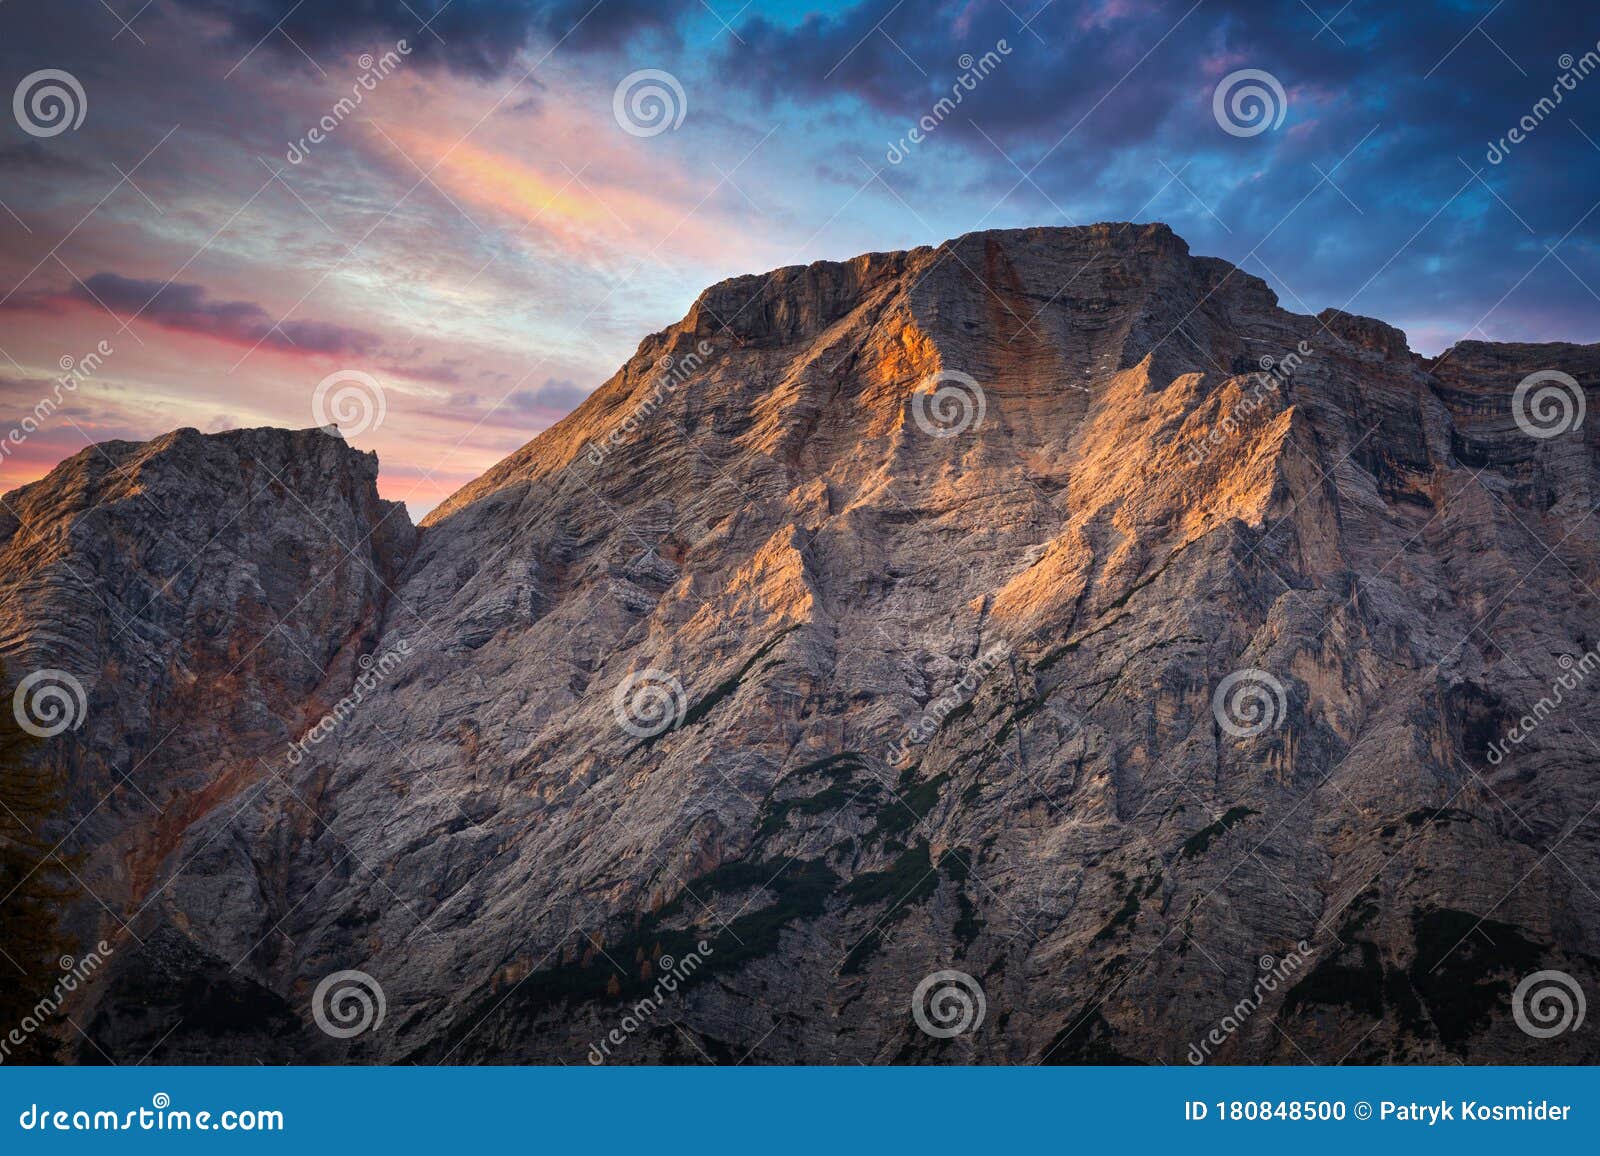 seekofel peak in dolomites at sunrise, italy